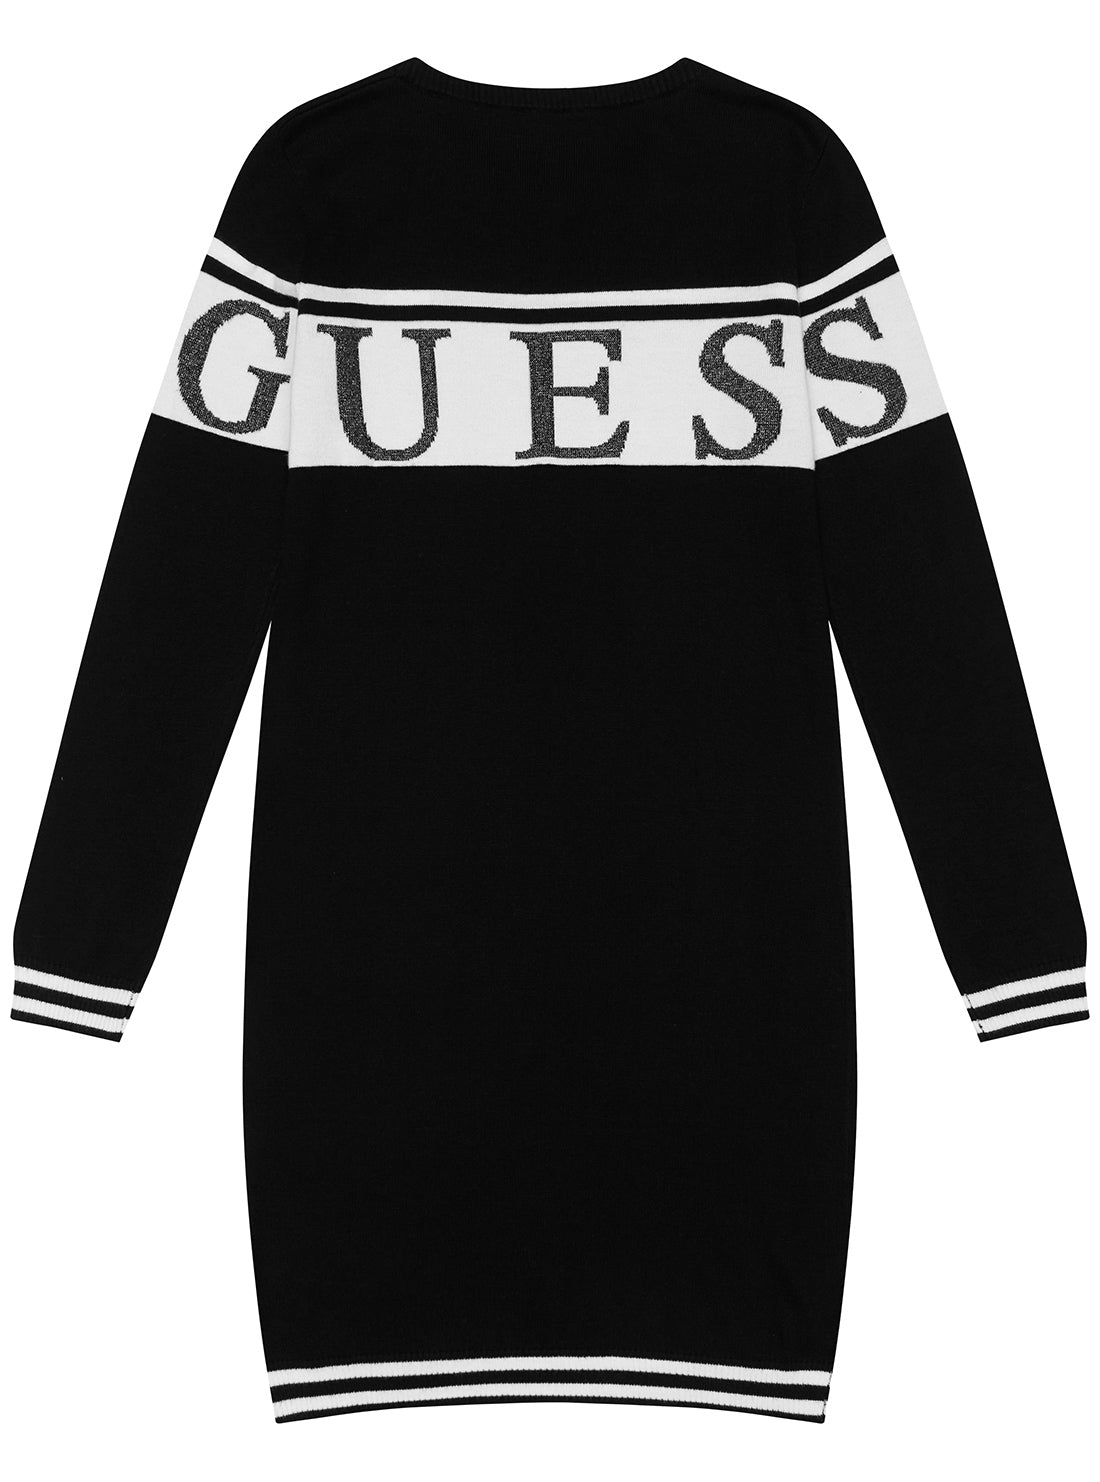 GUESS Black Long Sleeve Knit Dress (7-16) back view